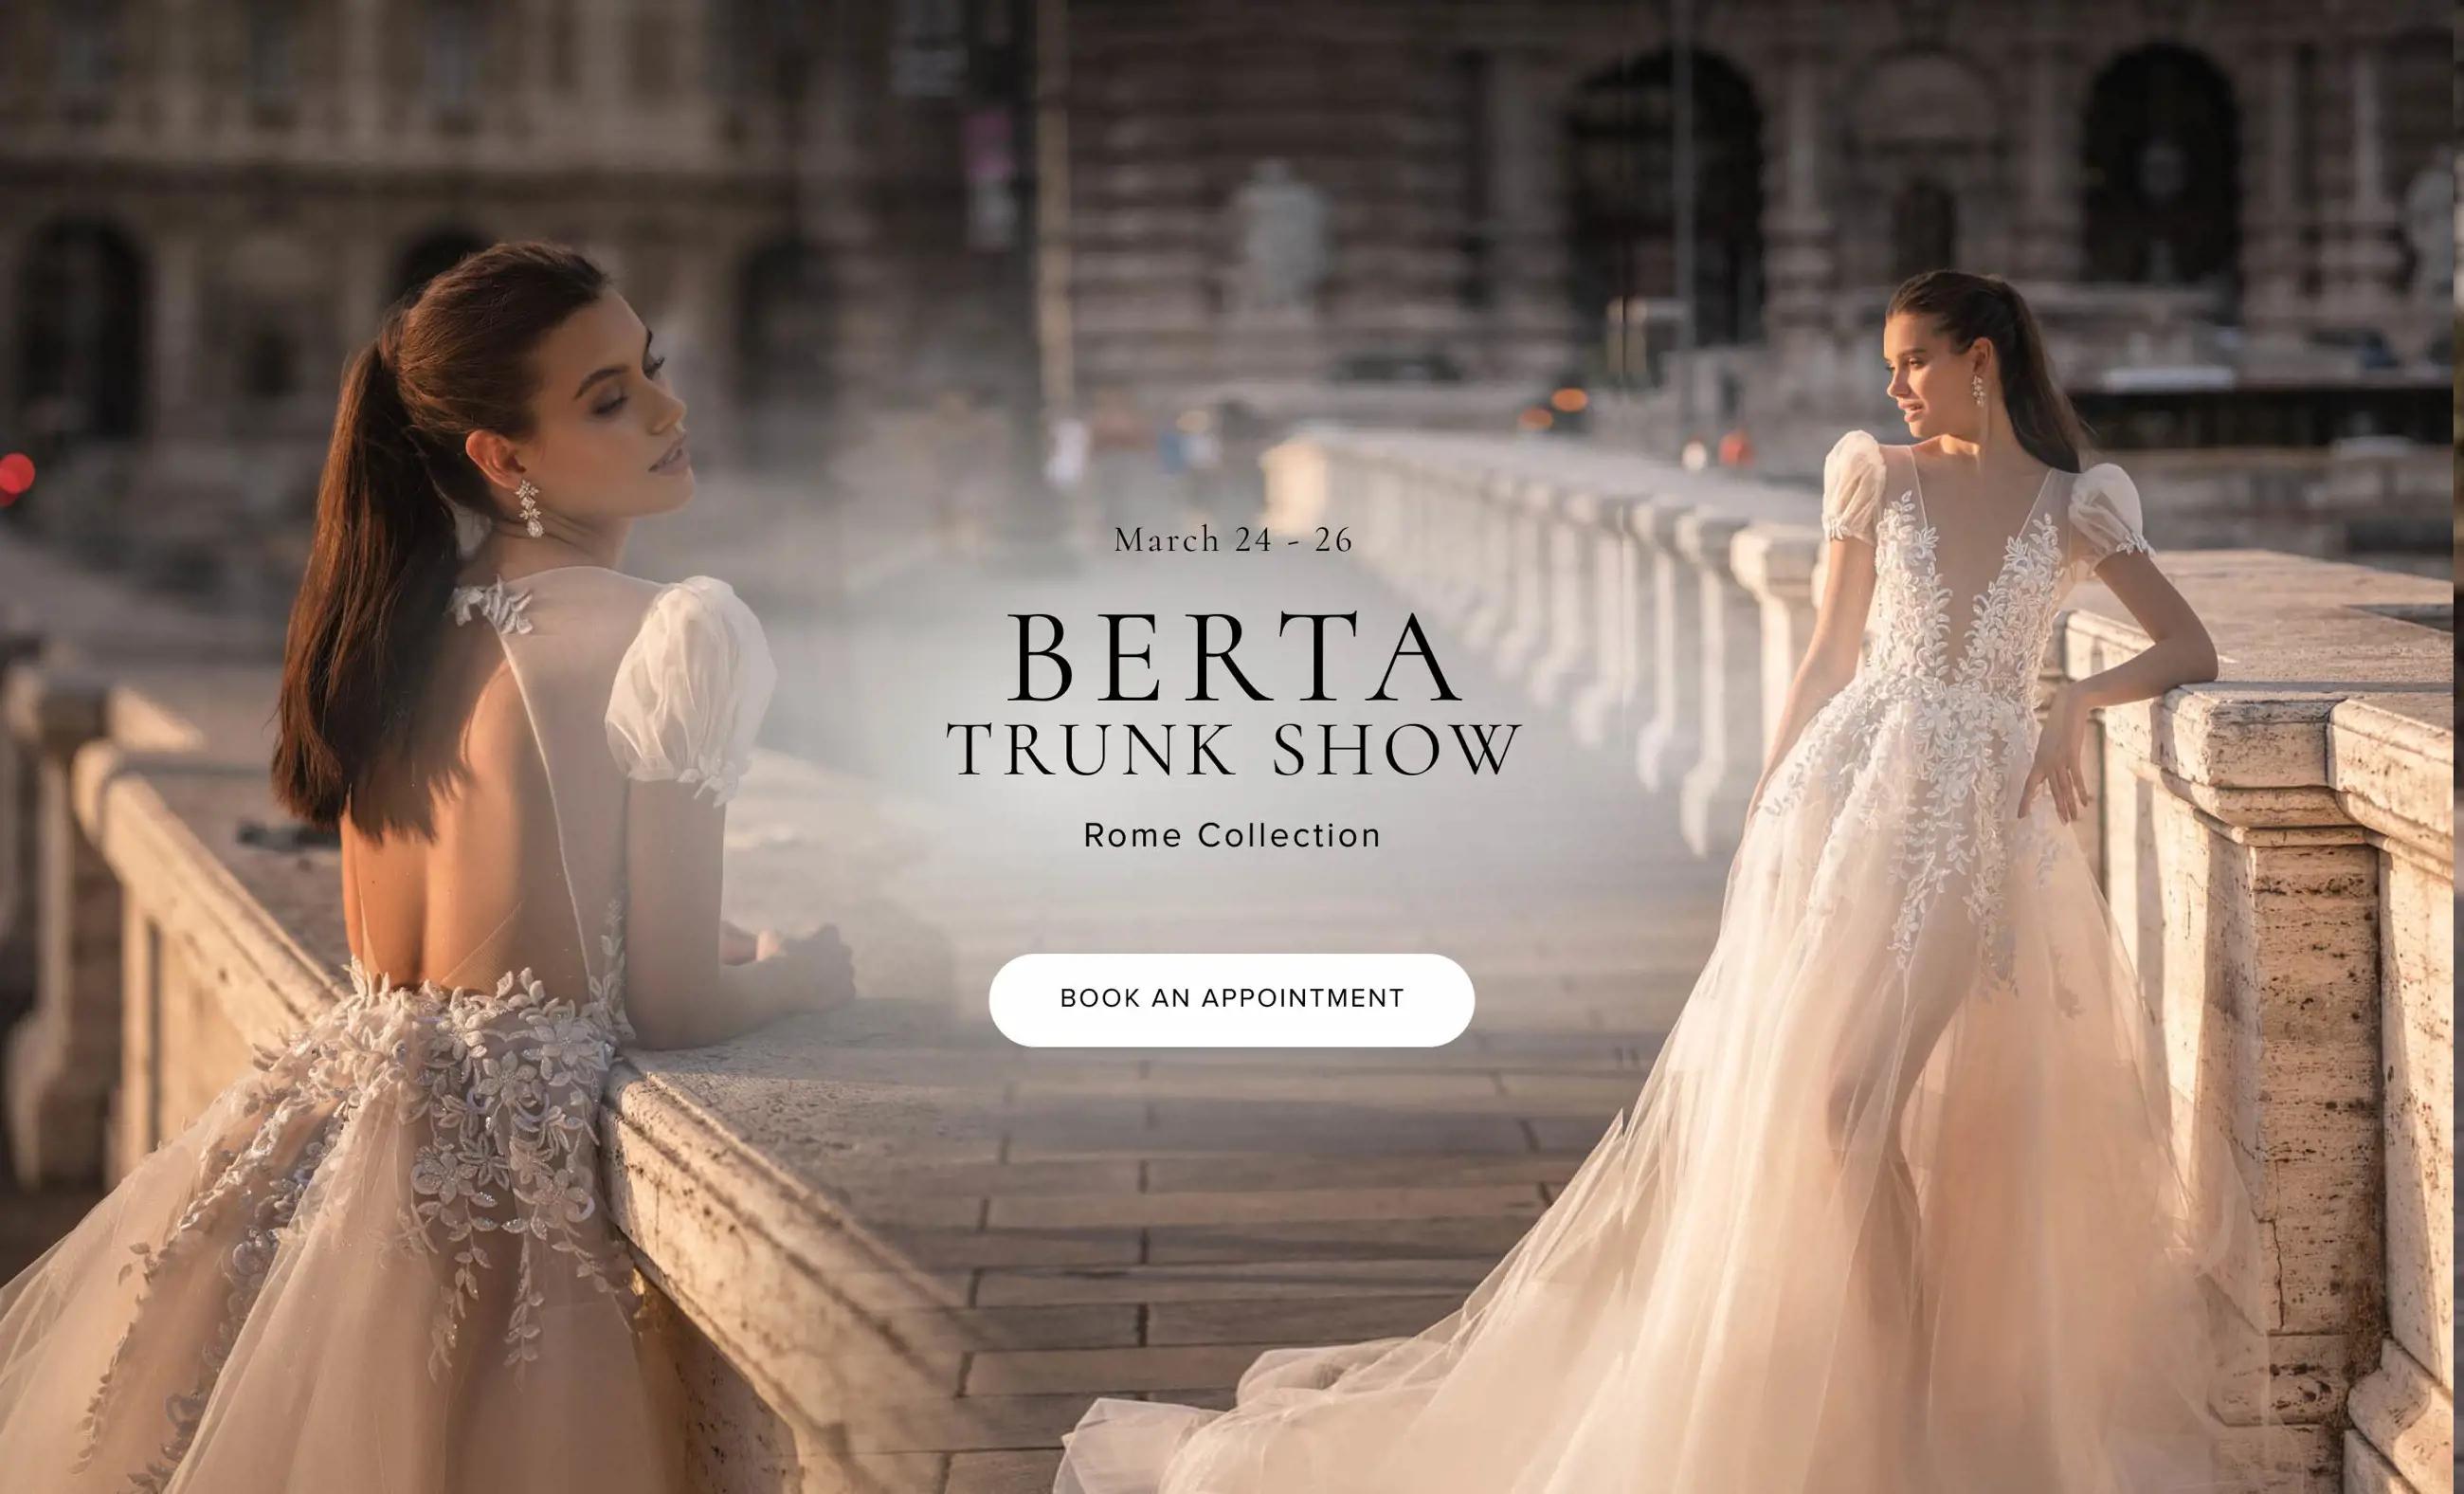 "Berta Trunk Show (Rome Collection)" banner for desktop